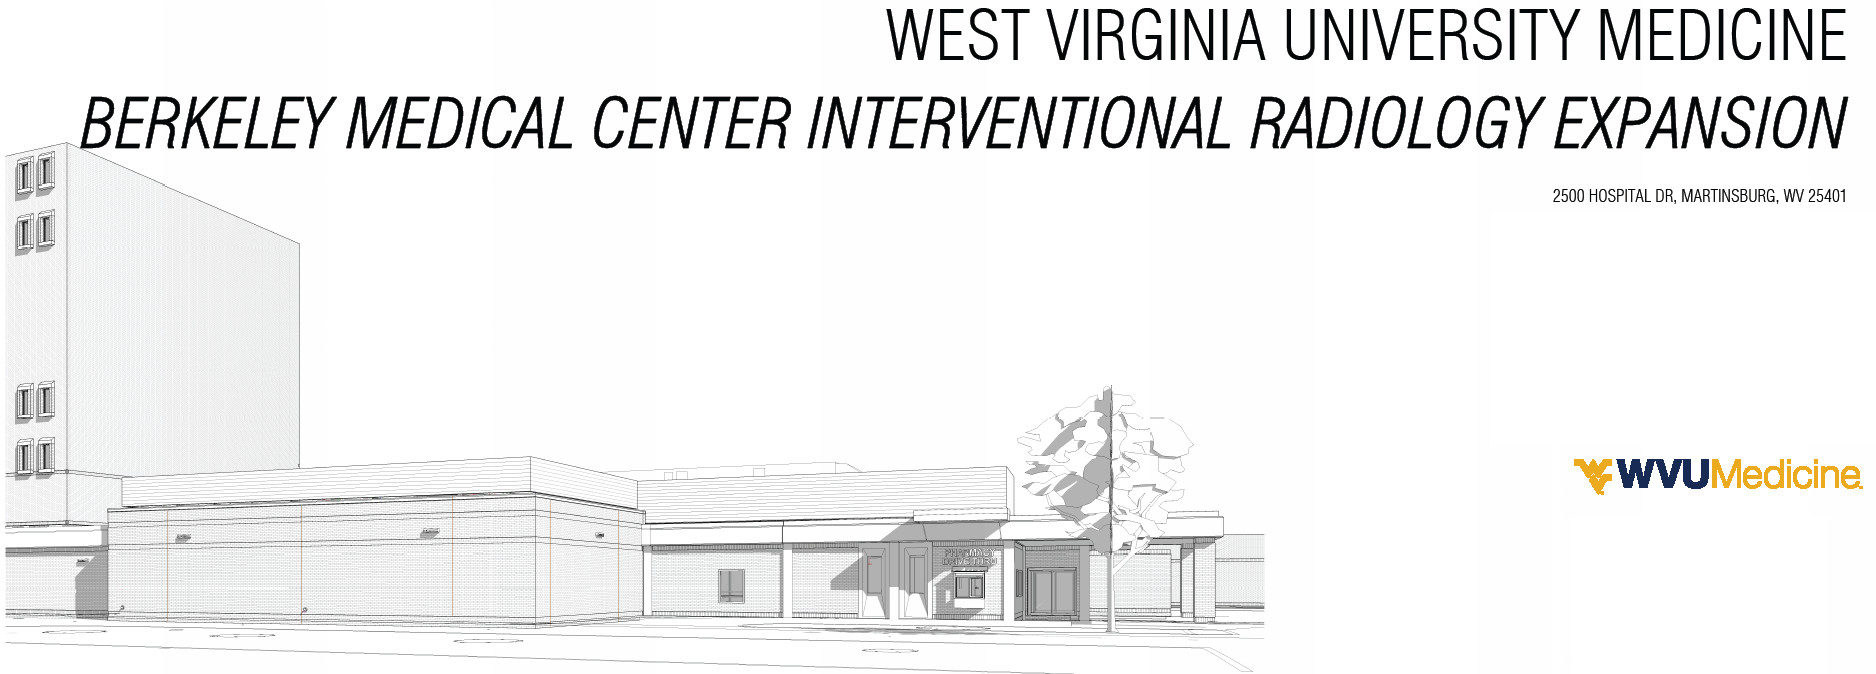 West Virginia University Berkely Medical Center – Interventional Radiology Expansion